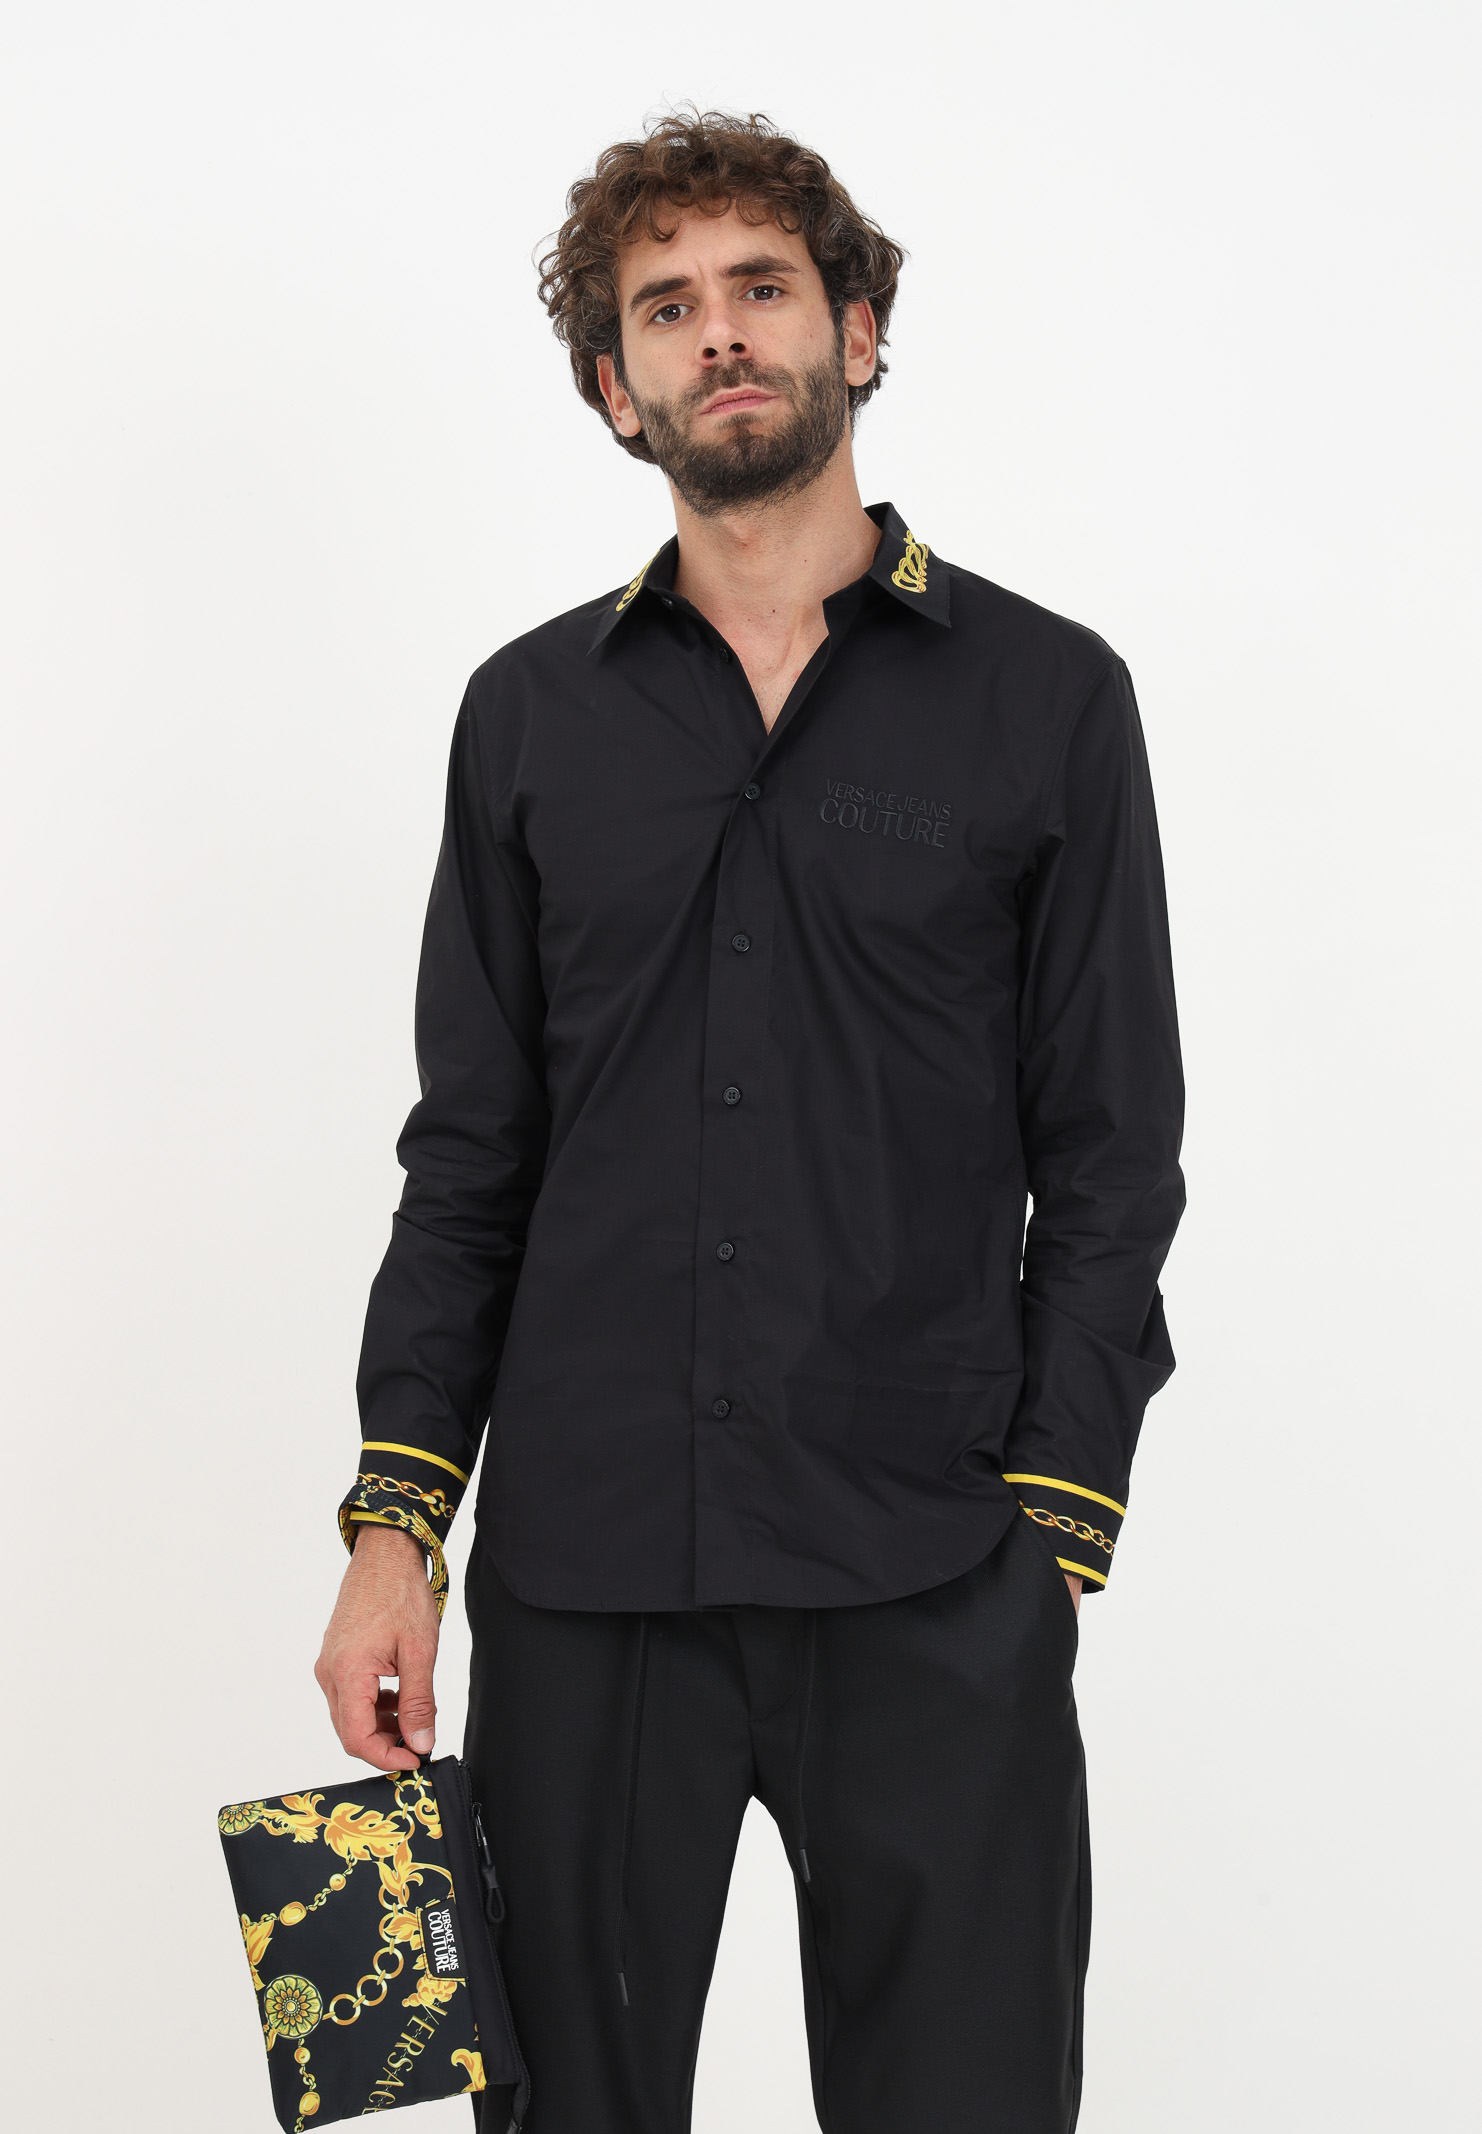 Camicia nera con logo Couture da uomo - VERSACE JEANS COUTURE - Pavidas